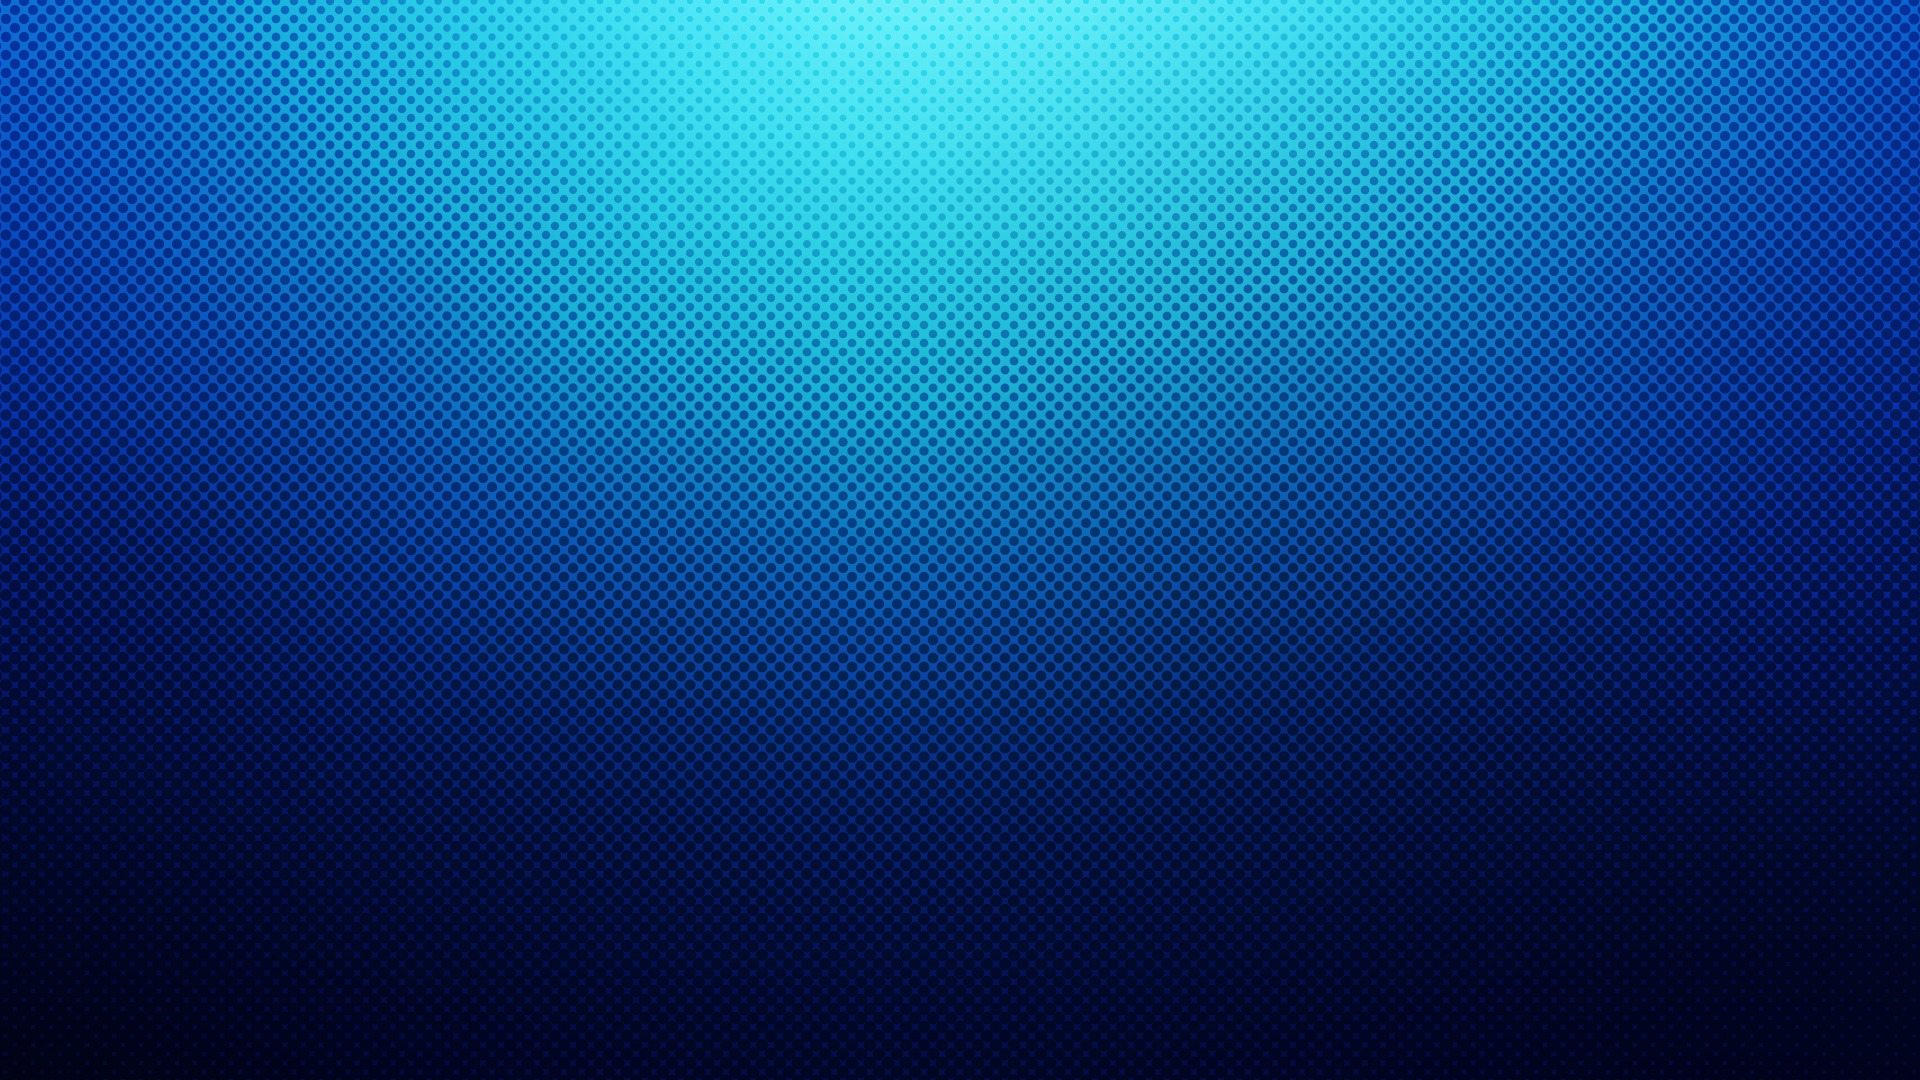 Wp Content Uploads Blue Gradient Background HD Wallpaper3 Jpg